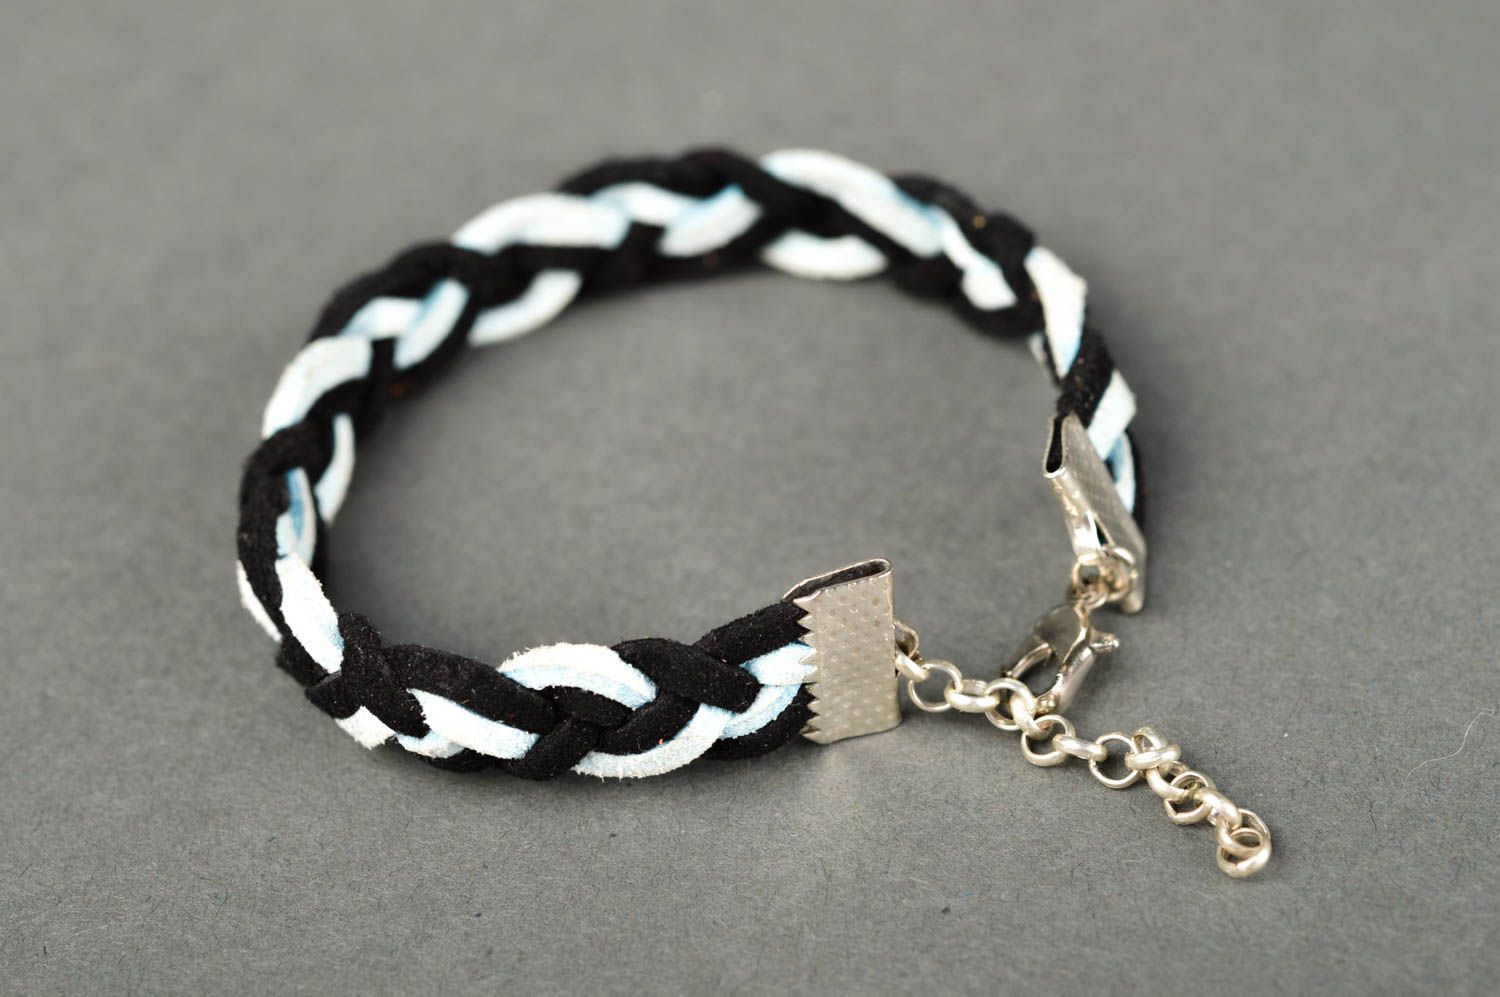 Handmade bracelet suede bracelet wrist bracelet gifts for girls cool jewelry photo 4